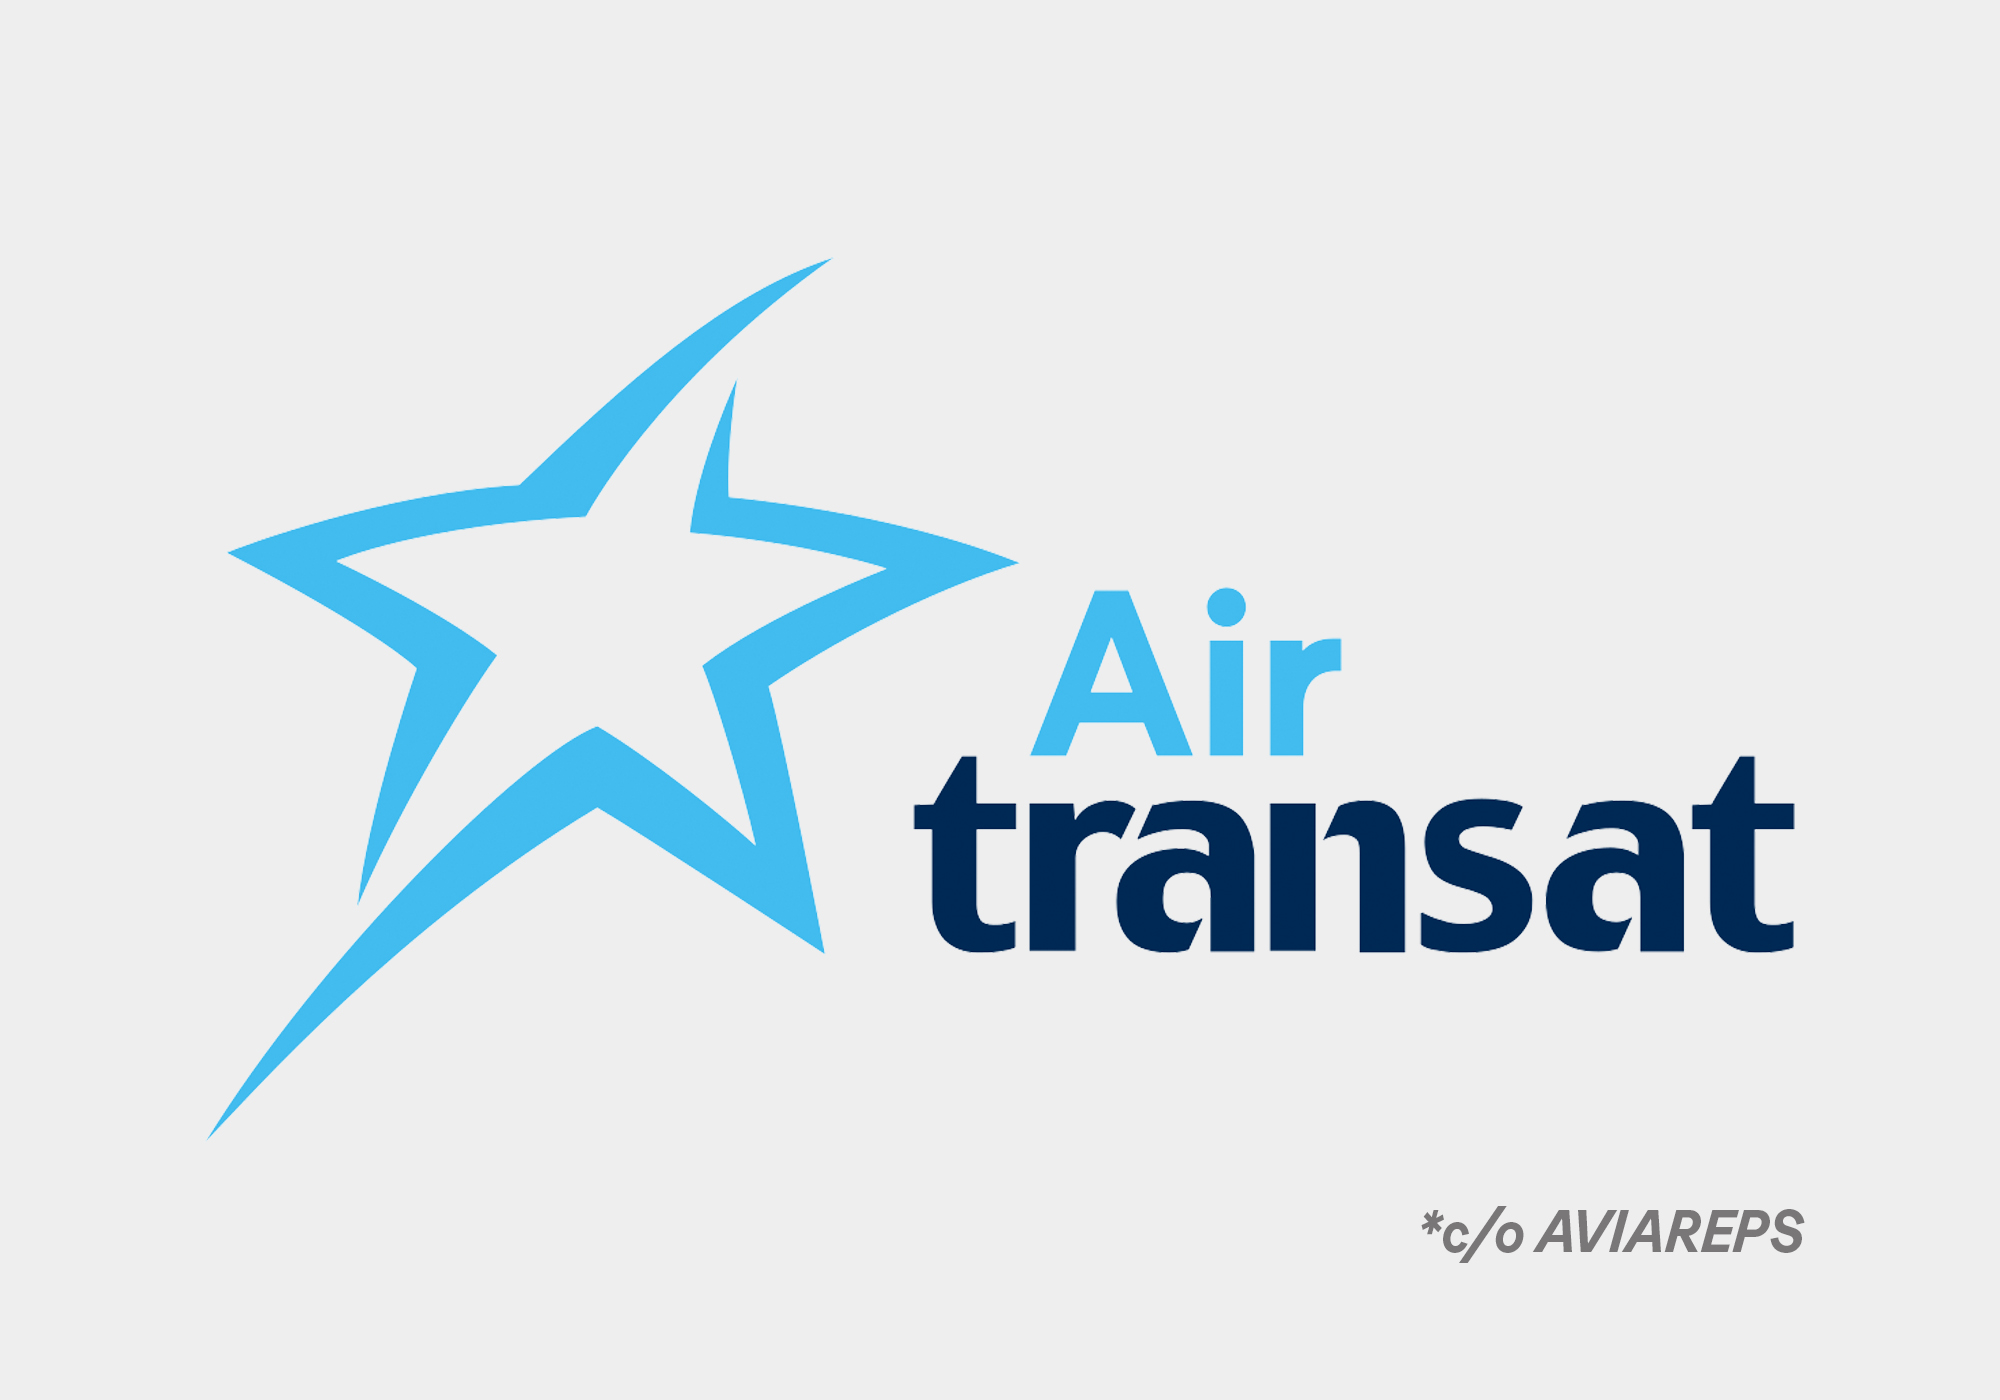 BARIN - Air Transat logo